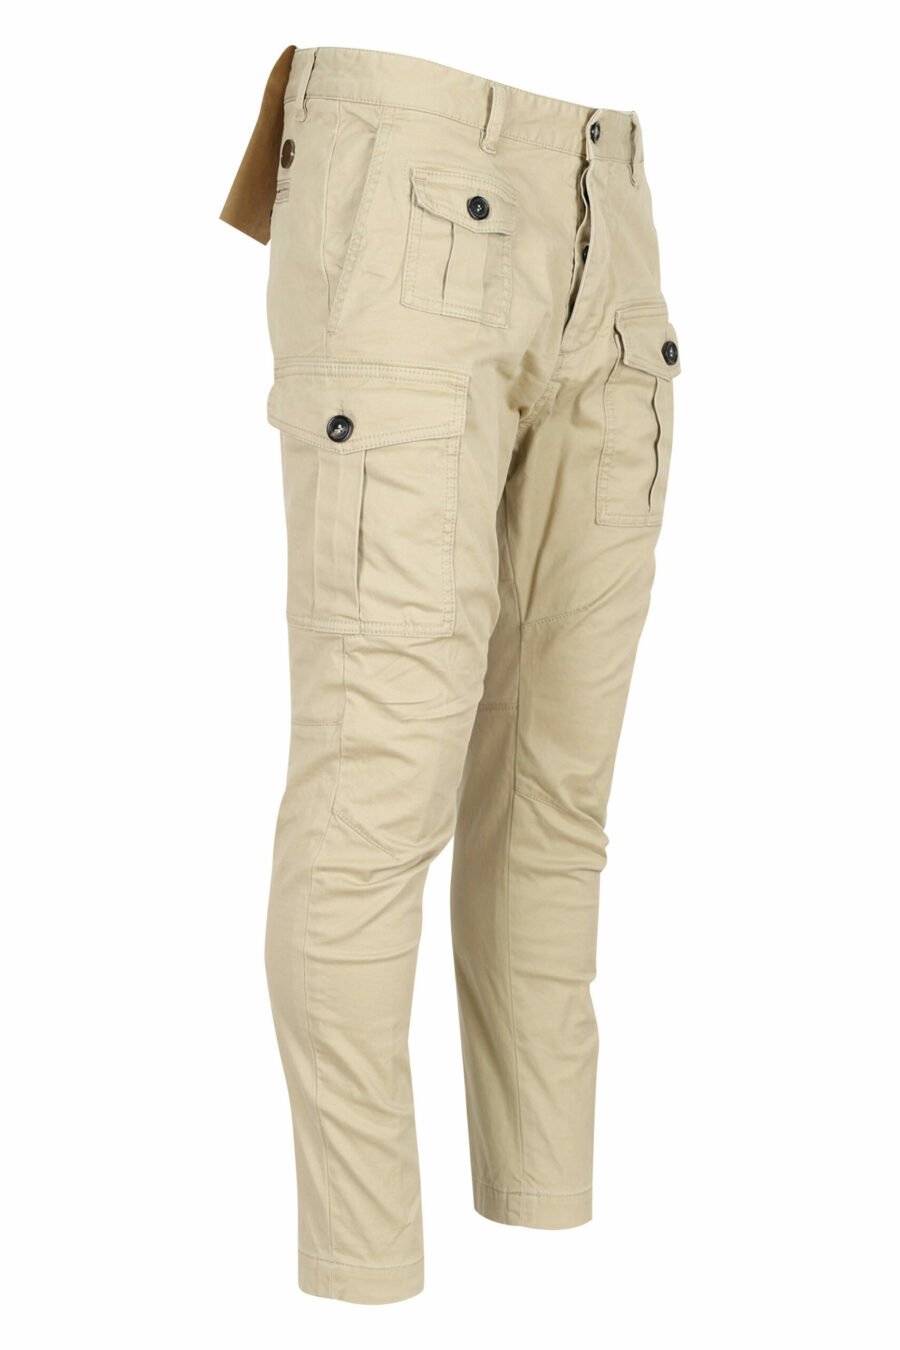 Pantalon cargo sexy beige avec poches latérales - 8052134973615 1 échelle